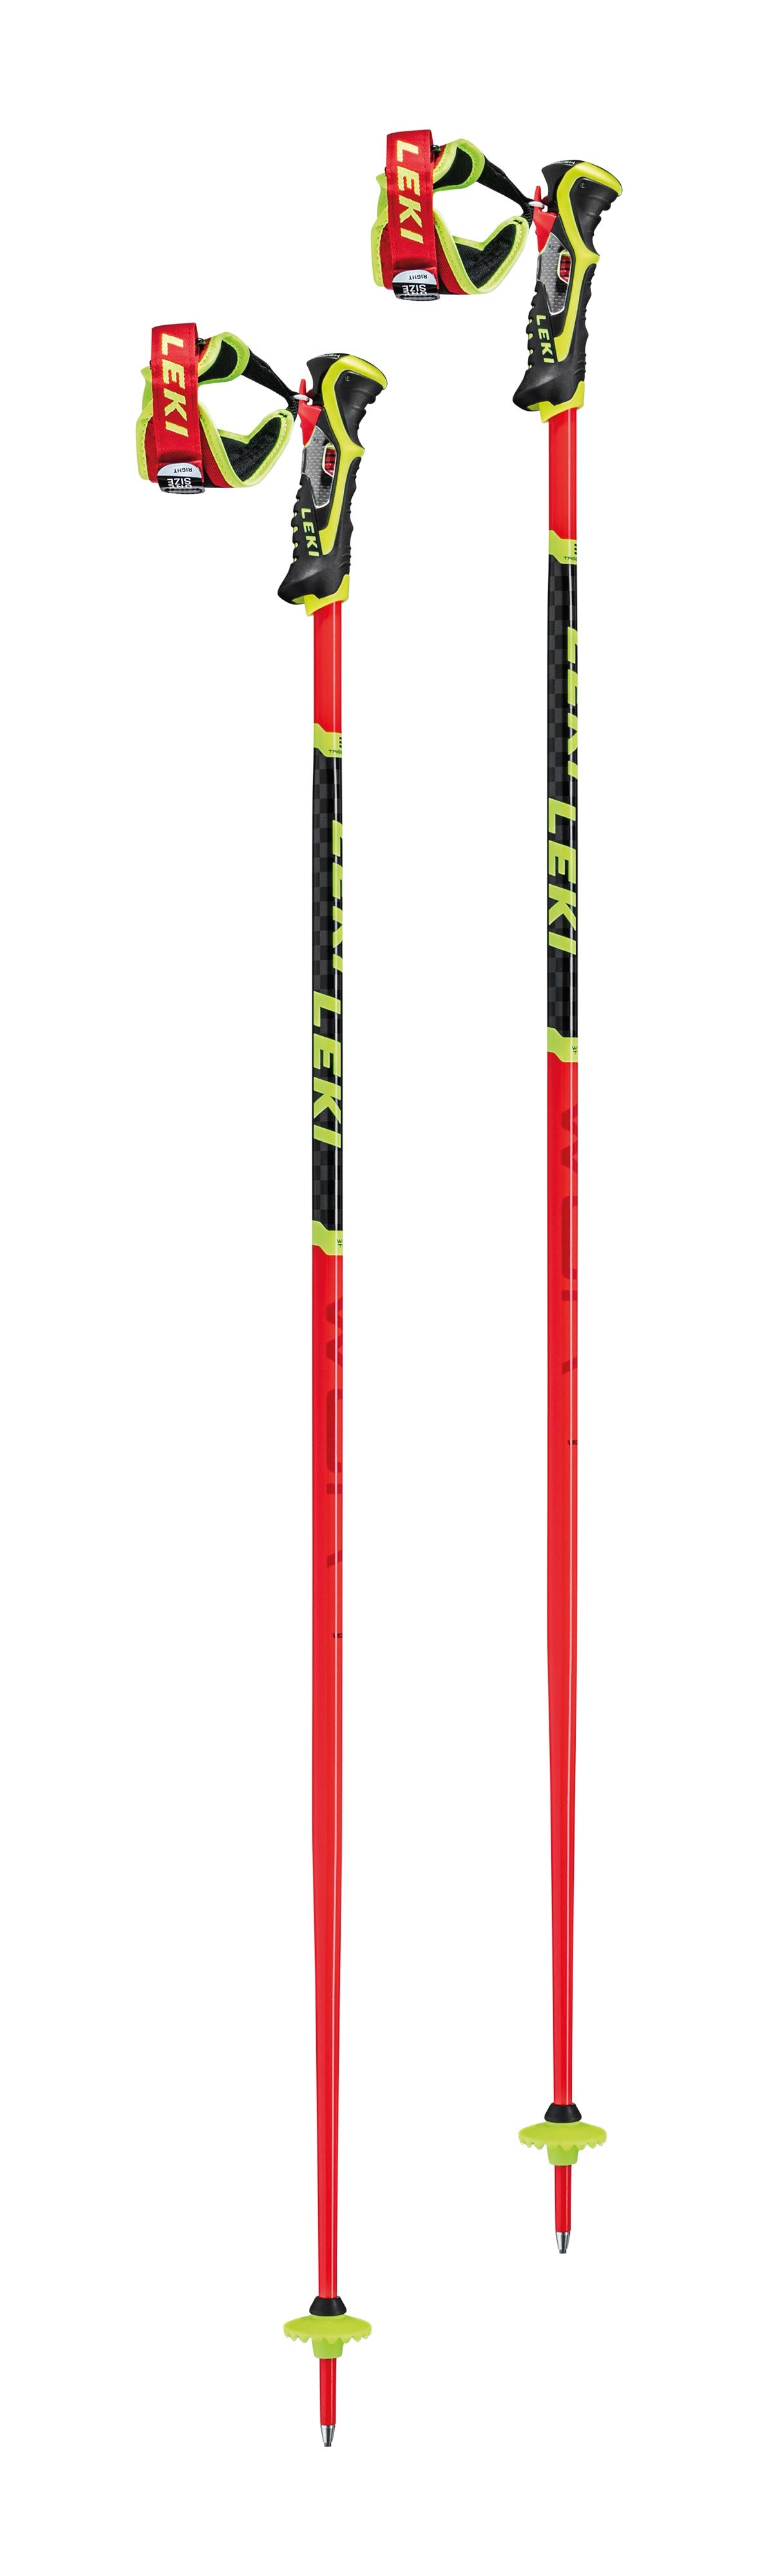 Leki WCR TBS SL 3D Aluiminum Alpine Ski Race Poles | Red SKI POLES Leki 125cm  